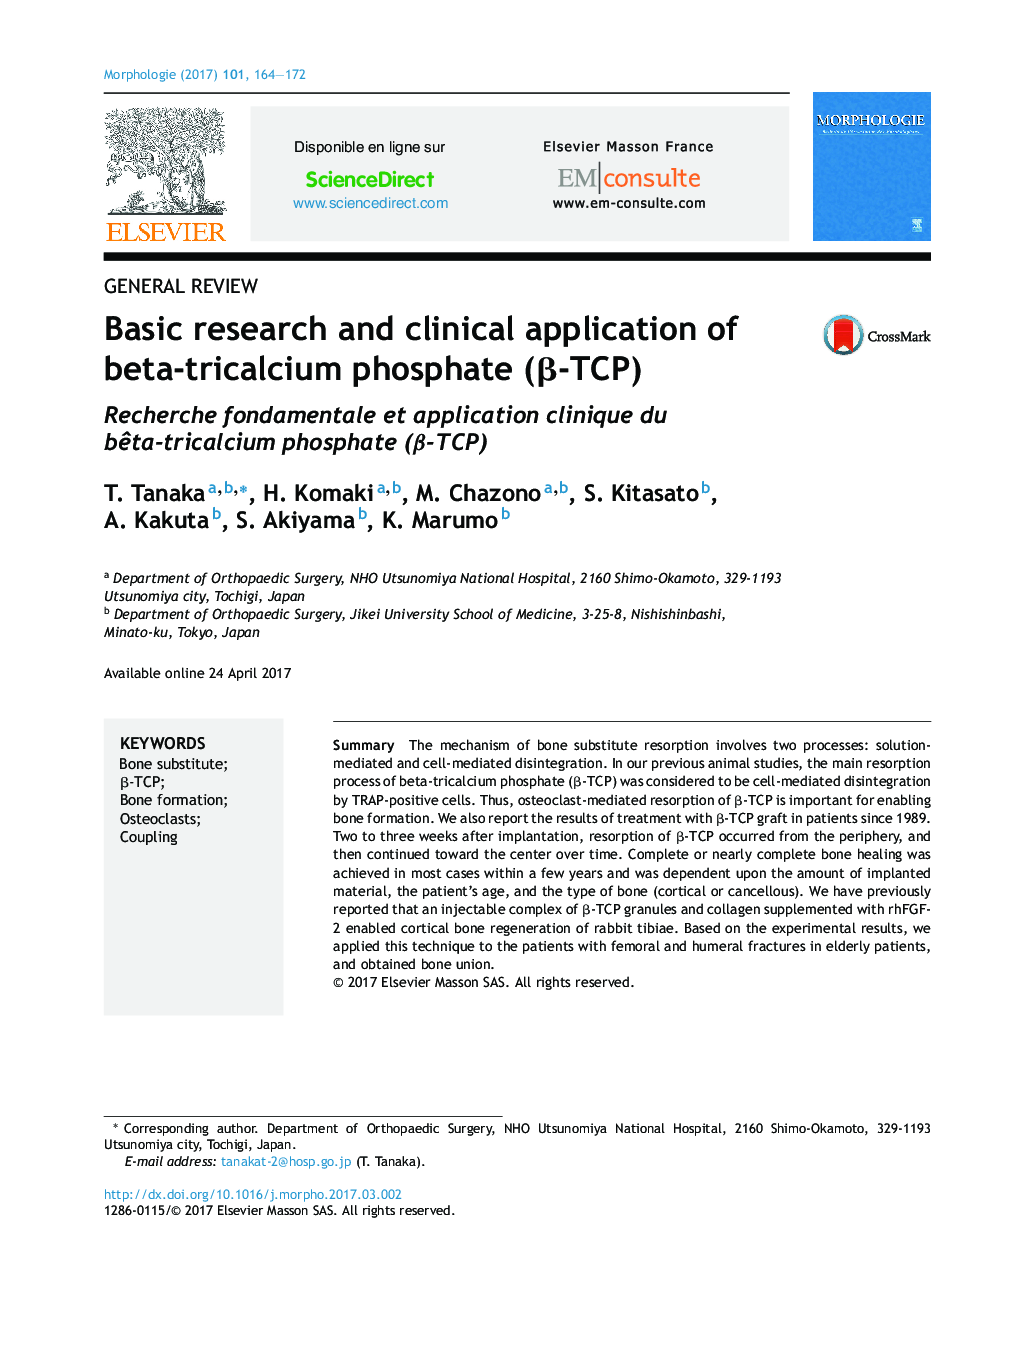 General reviewBasic research and clinical application of beta-tricalcium phosphate (Î²-TCP)Recherche fondamentale et application clinique du bÃªta-tricalcium phosphate (Î²-TCP)